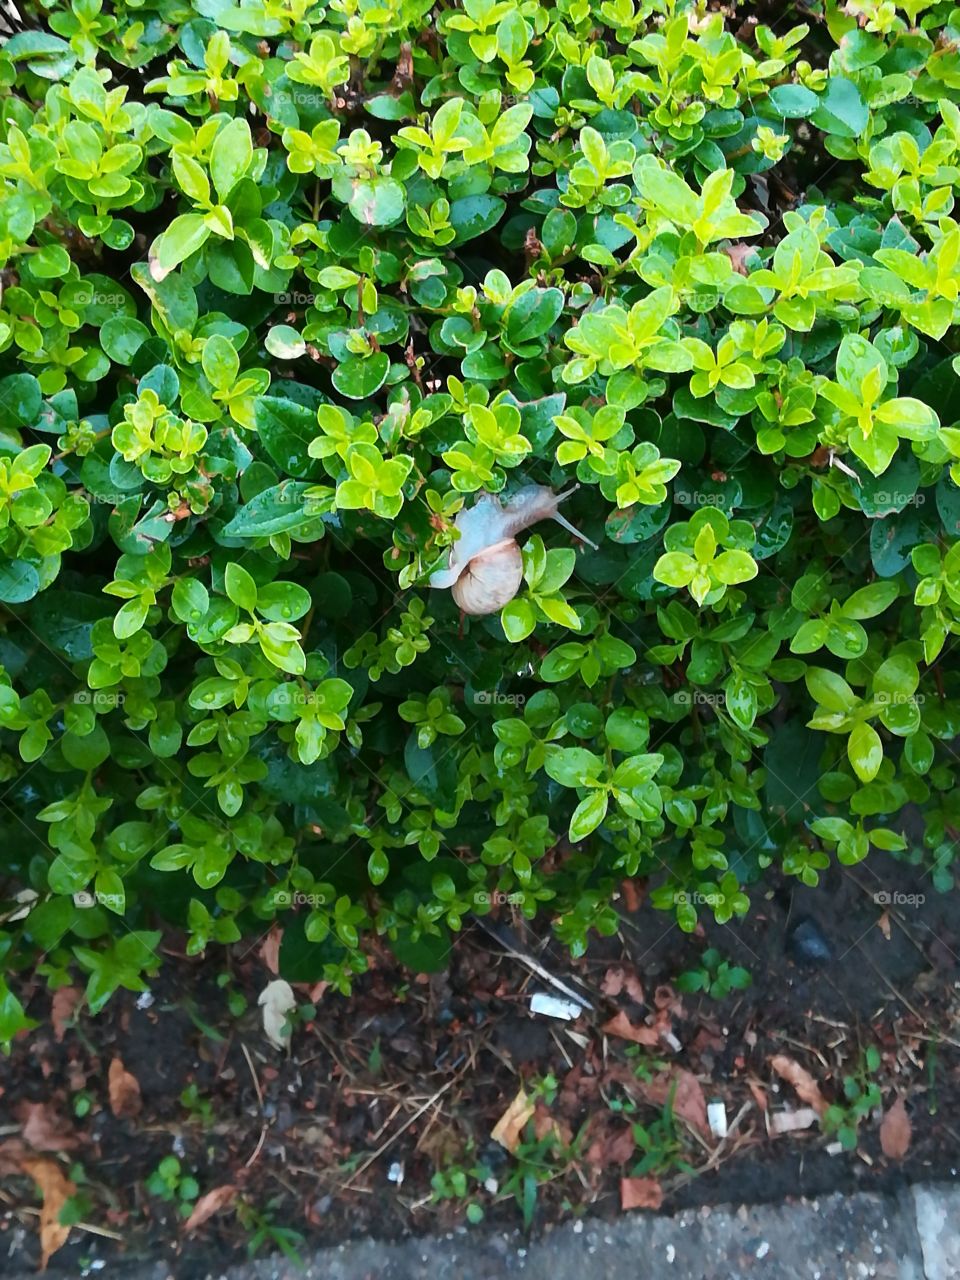 Snail hiding in the bush